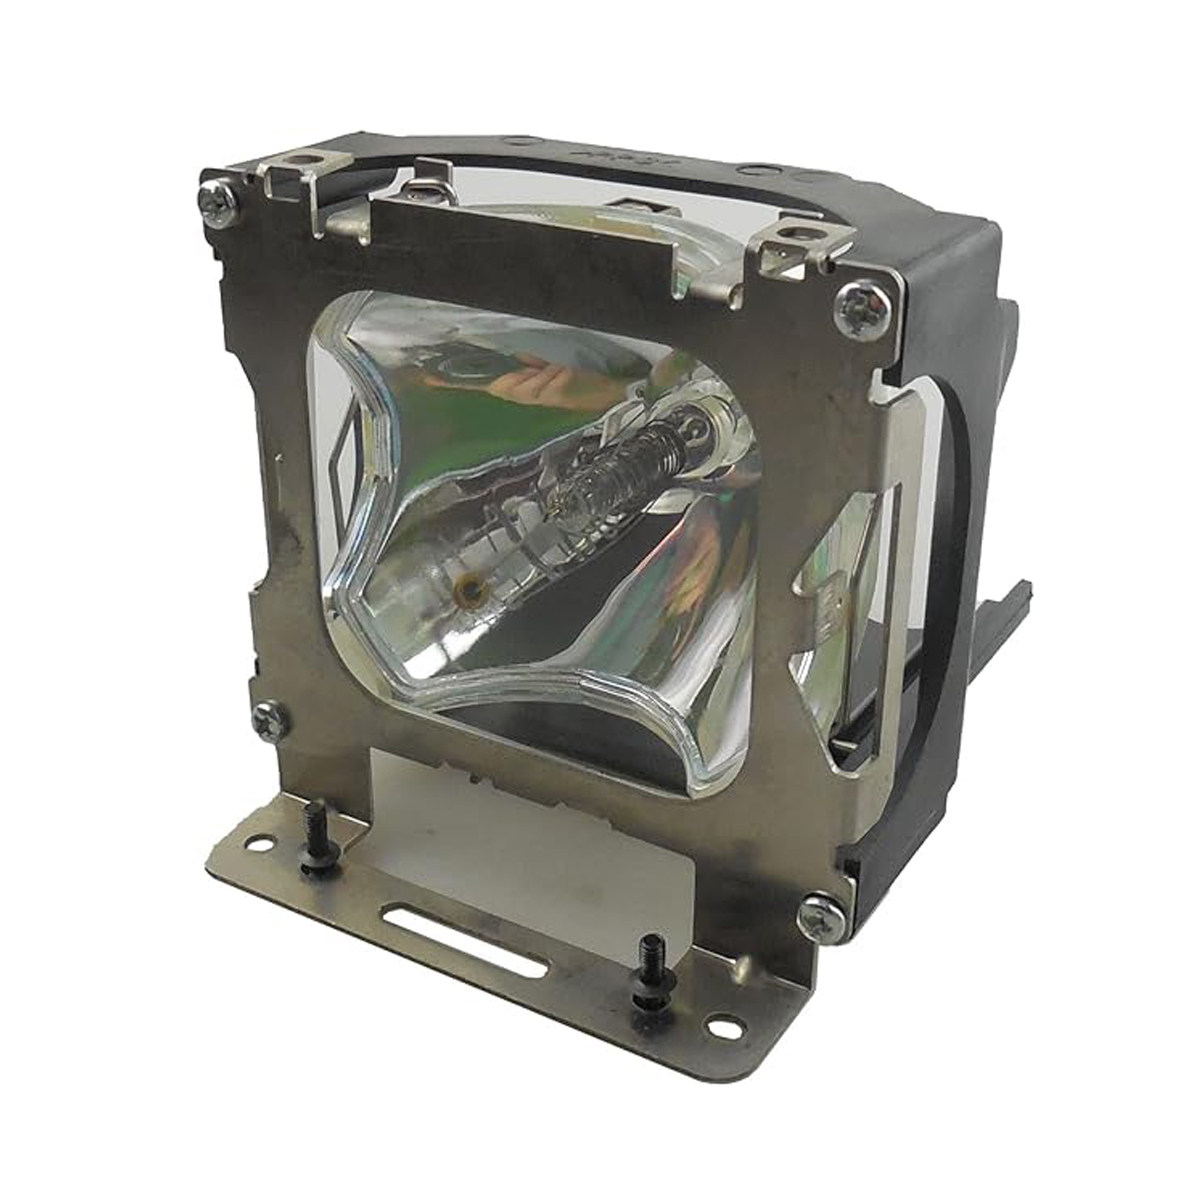 Replacement Projector lamp RLU-190-03A For VIEWSONIC LP860-2 PJ1060 PJ1060-2